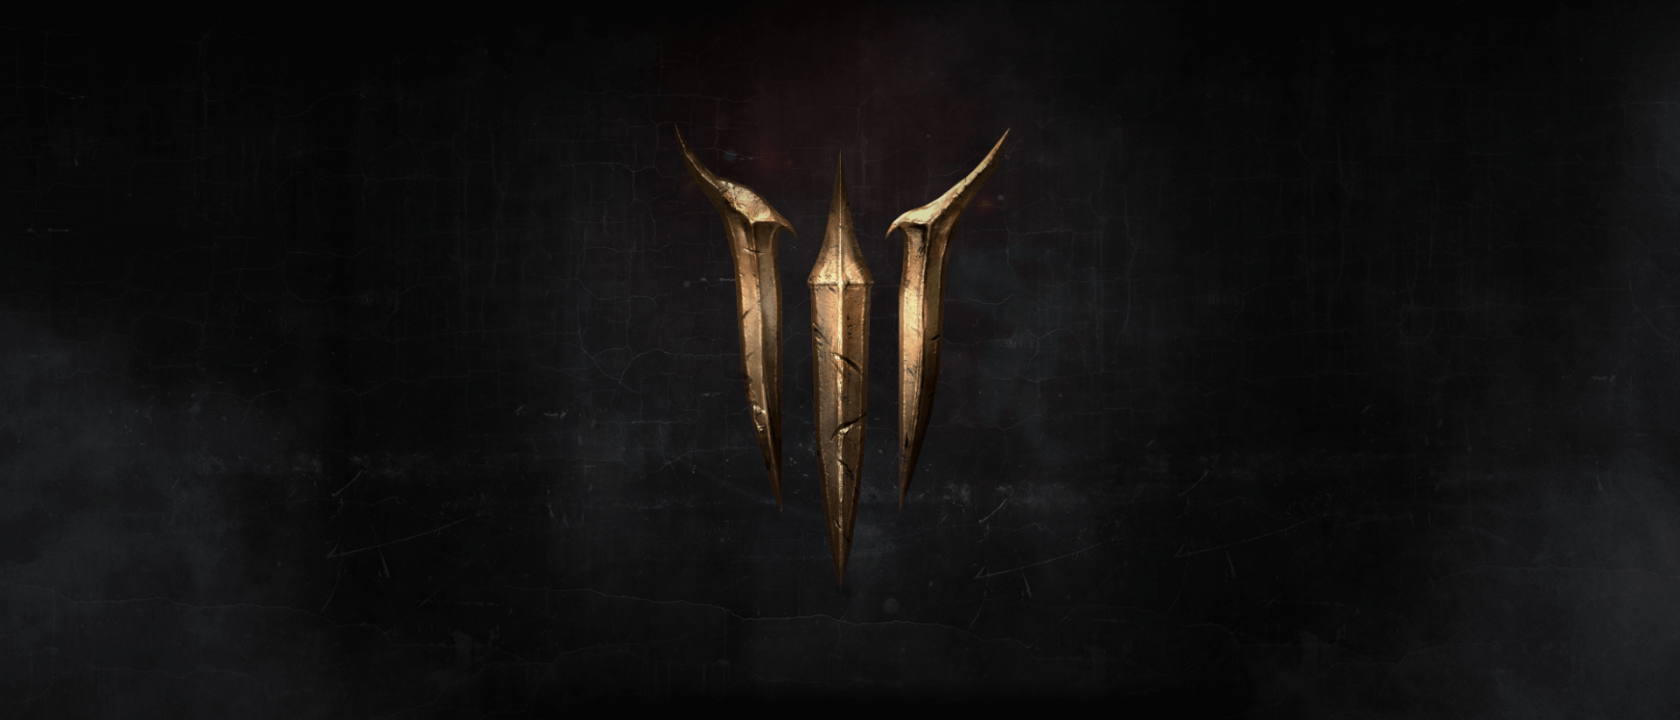 Divinity Original Sin 2 developer Larian Studios could be working on Baldur's Gate 3